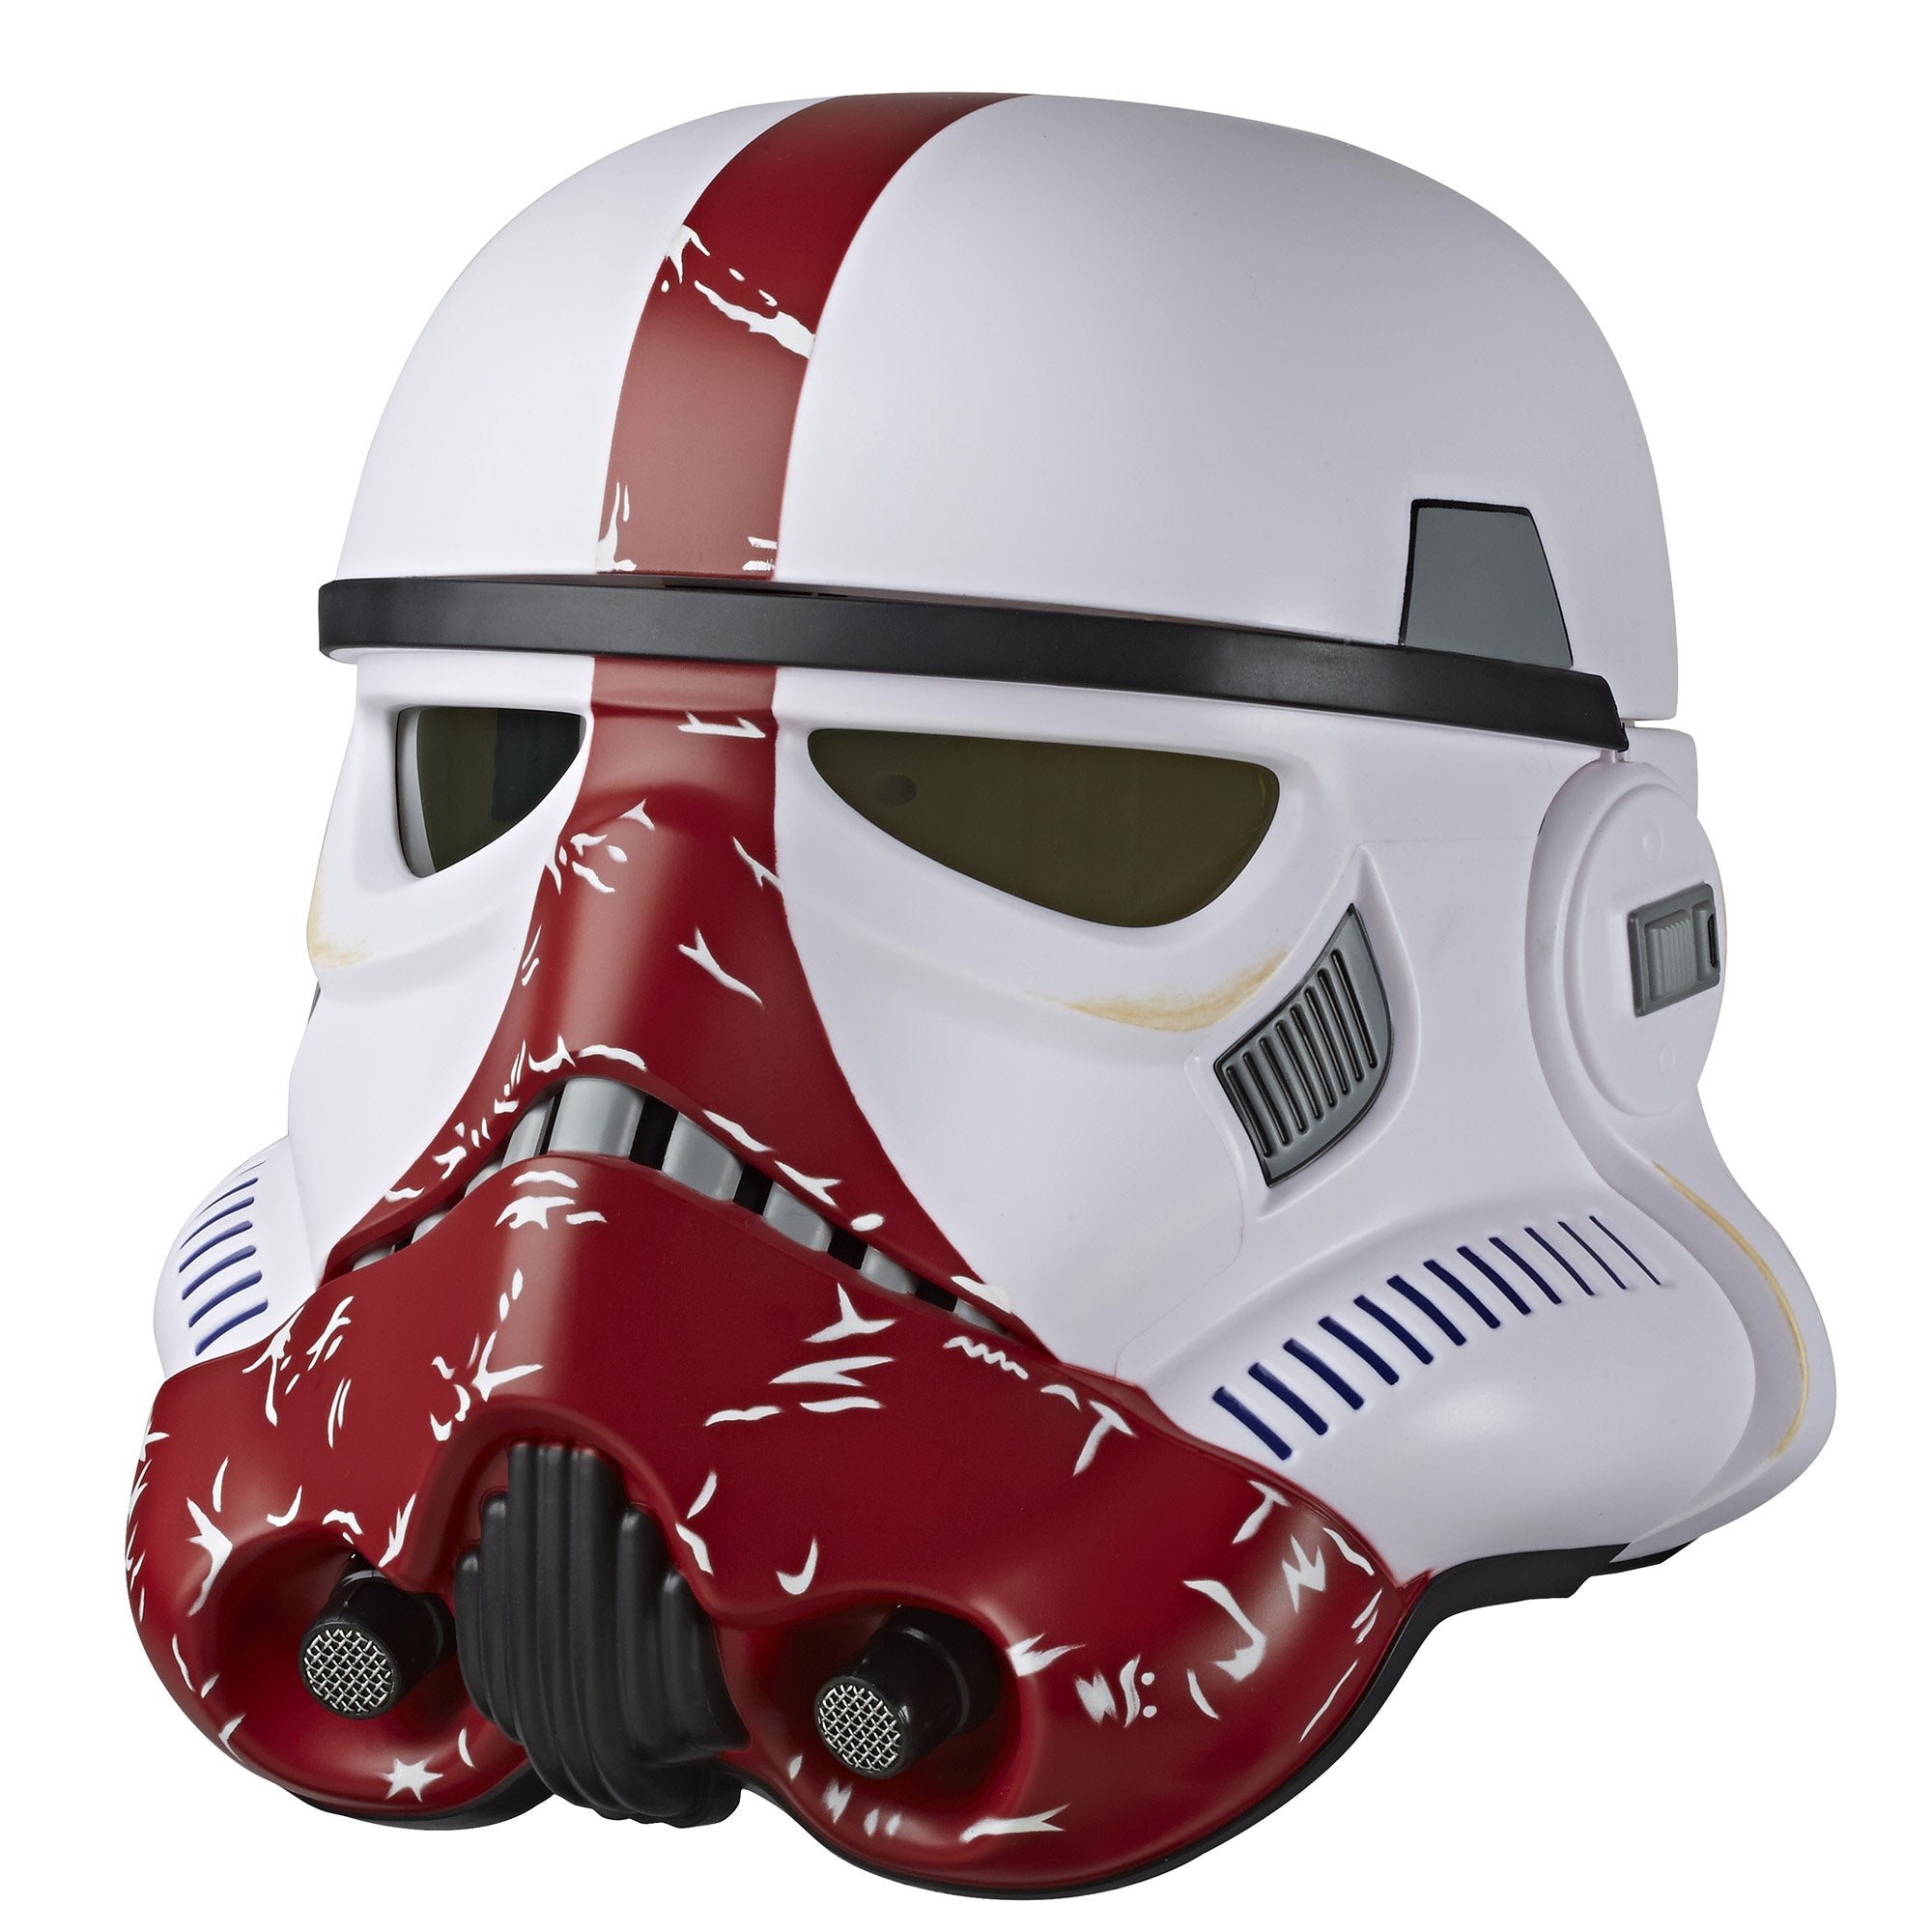 Hasbro - Star Wars: The Black Series - Wearable Premium Electronic Incinerator Stormtrooper Helmet (1/1 Scale) - Marvelous Toys